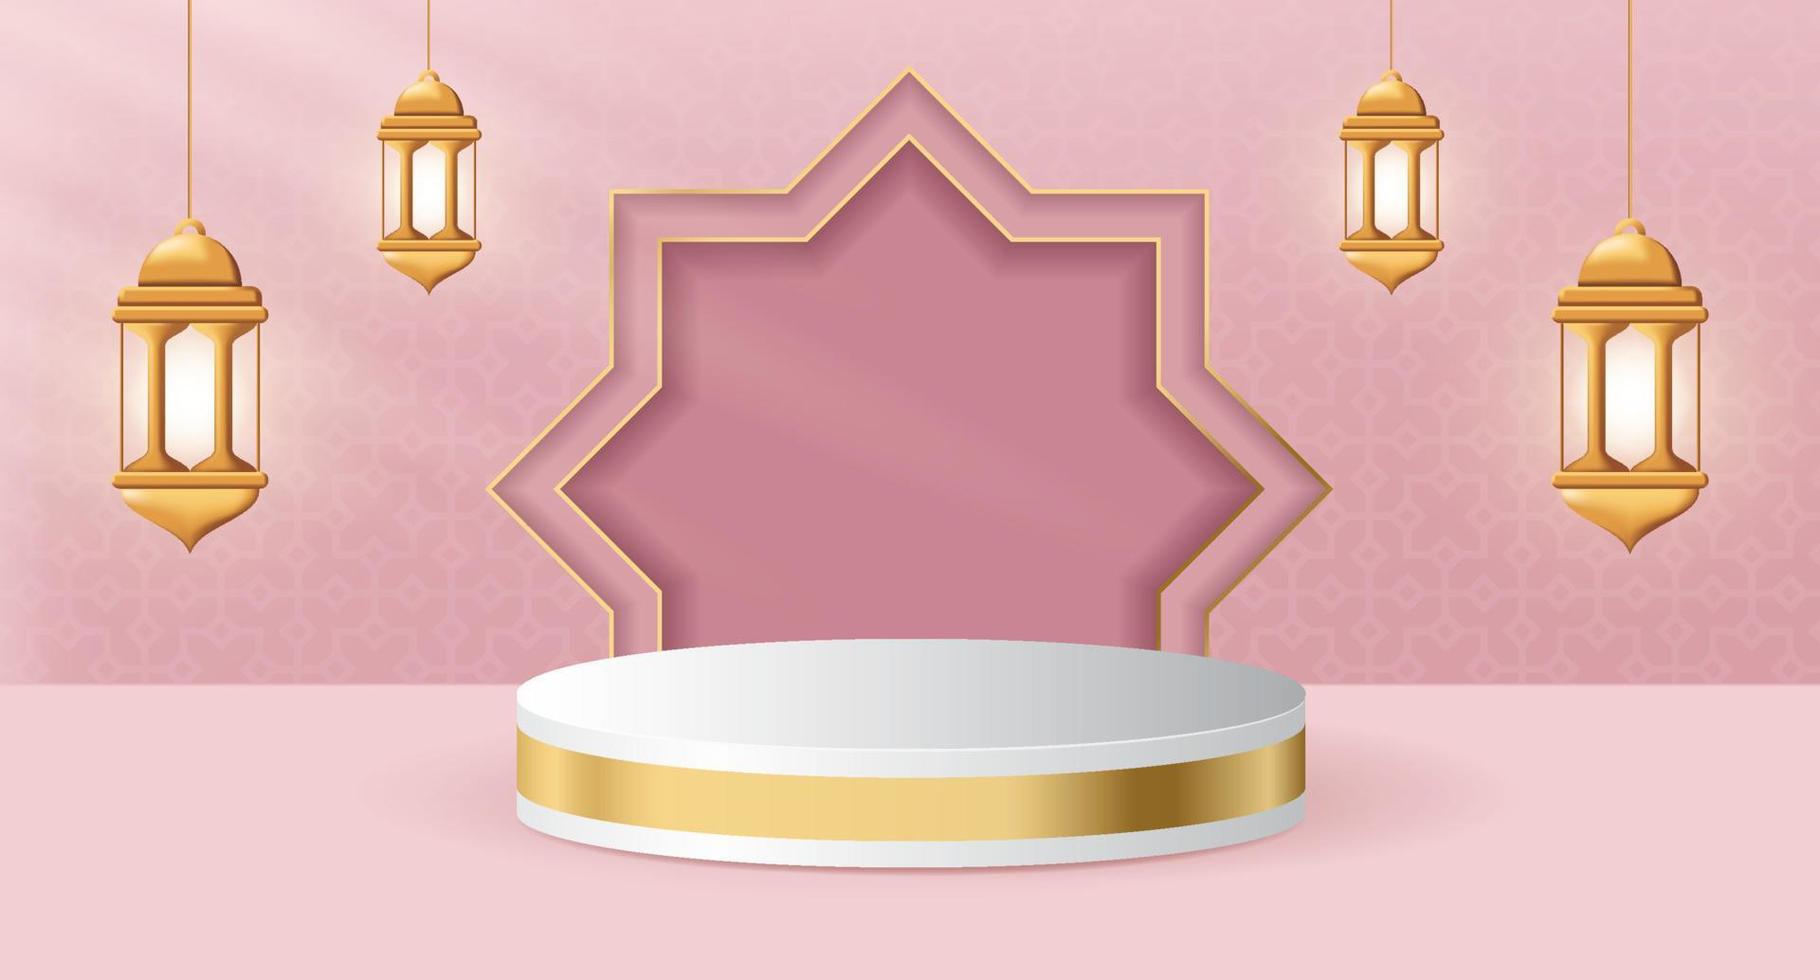 Podio de exhibición de productos 3d con temática islámica con linterna para ramadán. decoración de podio de pantalla 3d islámica con linterna realista. ilustración vectorial vector